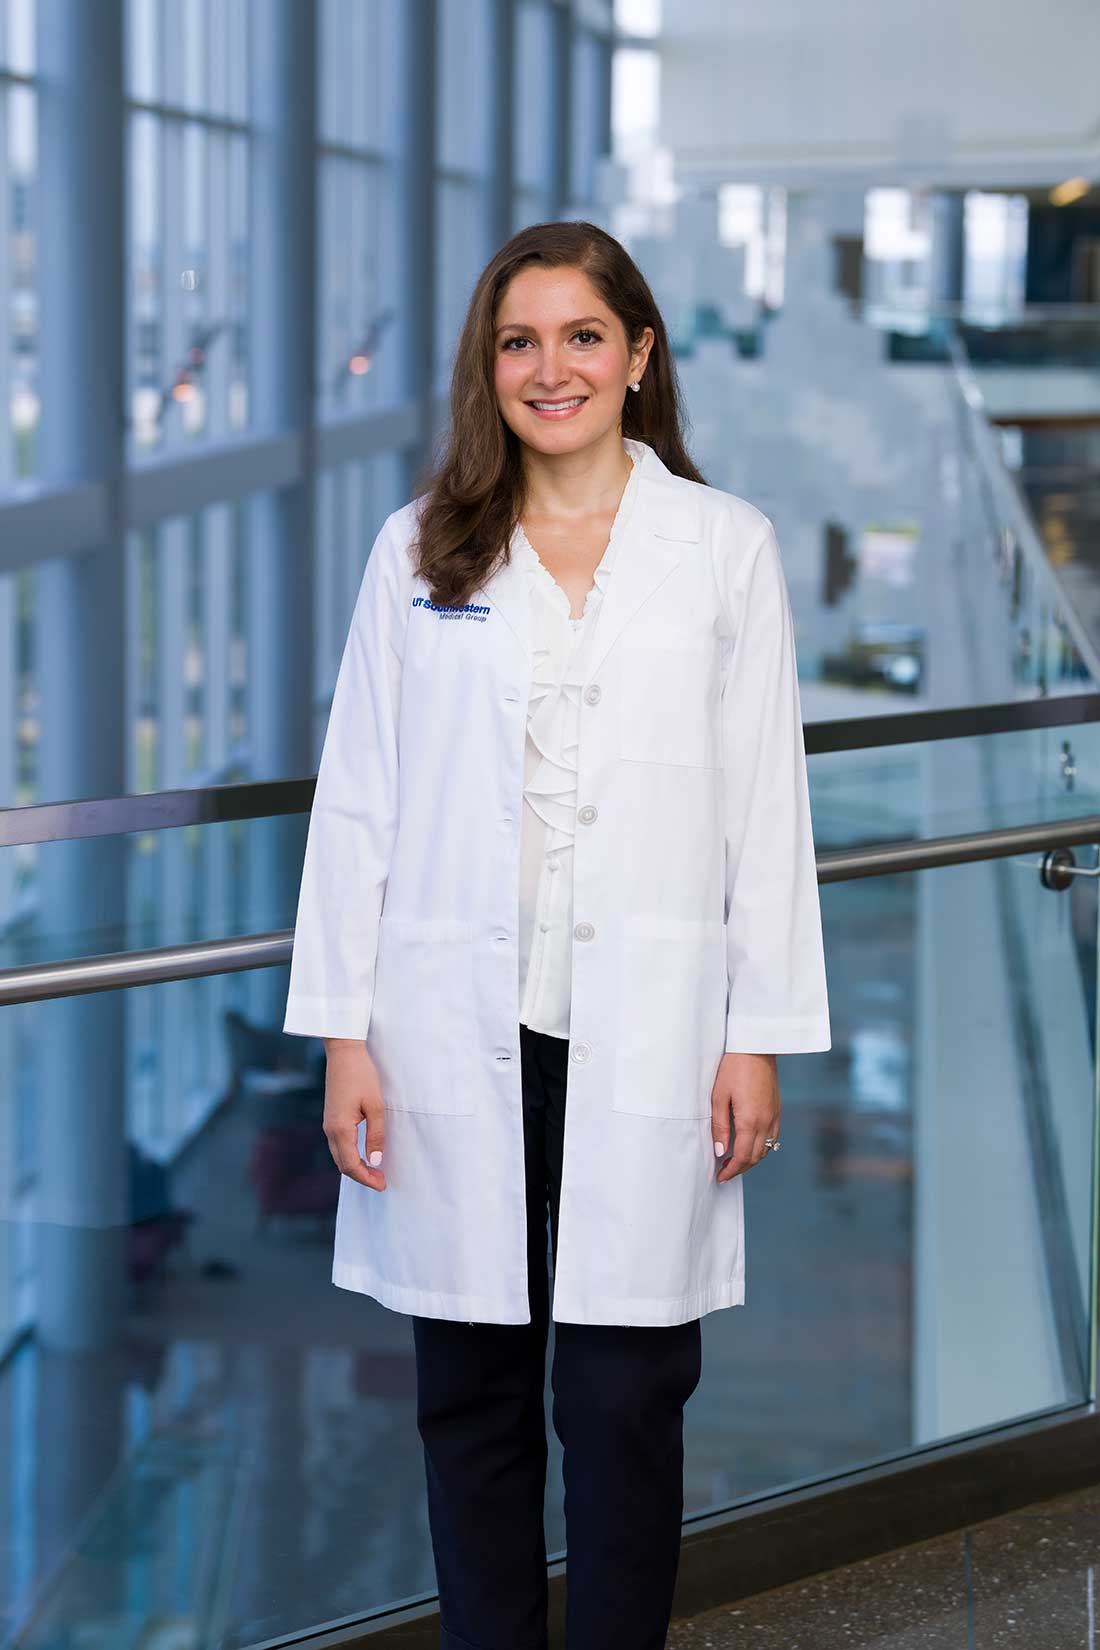 Jessica Kiarashi, M.D., Assistant Professor of Neurology
